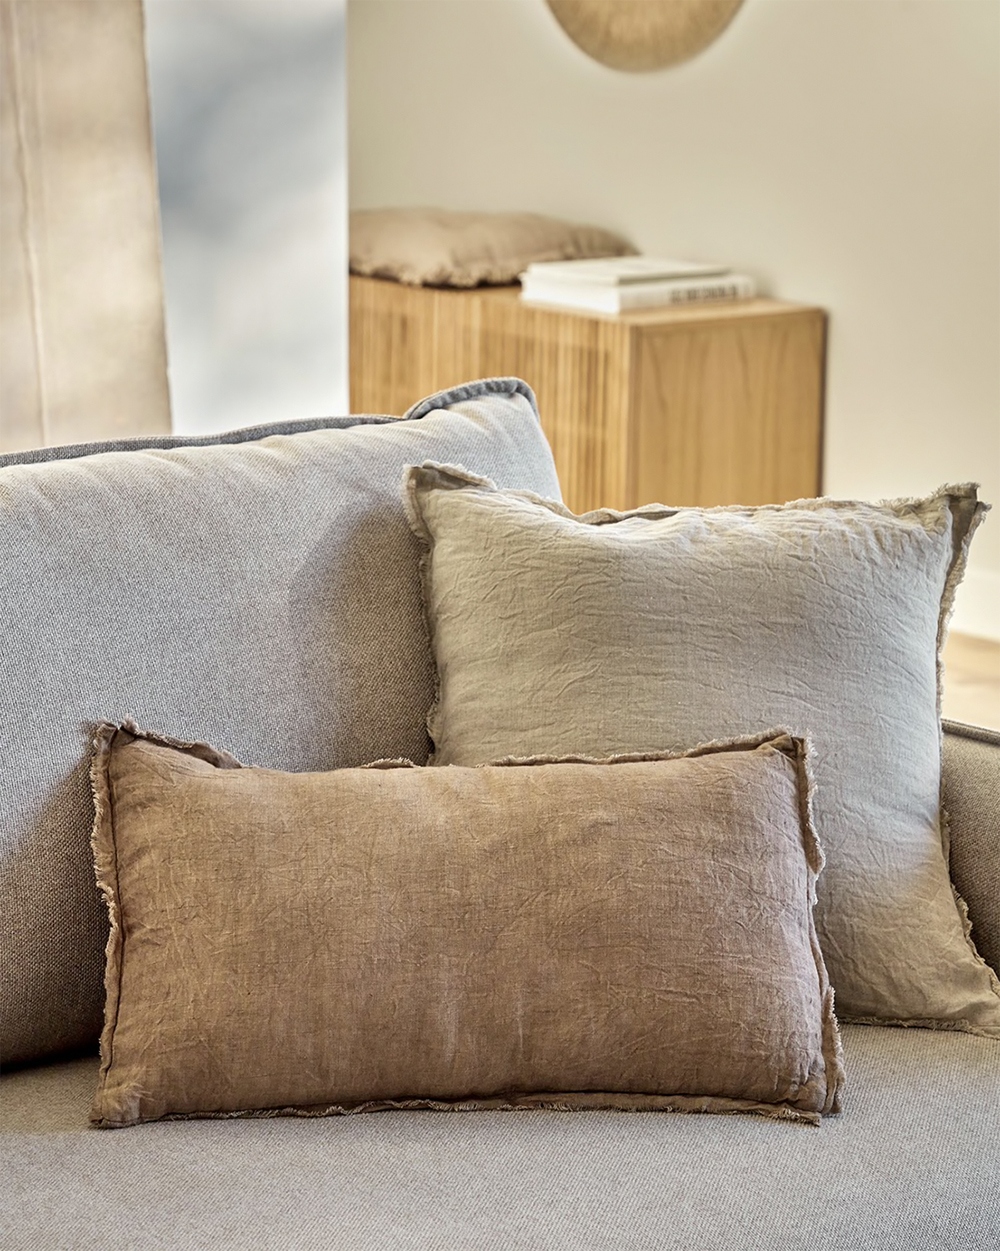 squarerooms raffles city bedding furnishings home decor shop kave pillows cushions